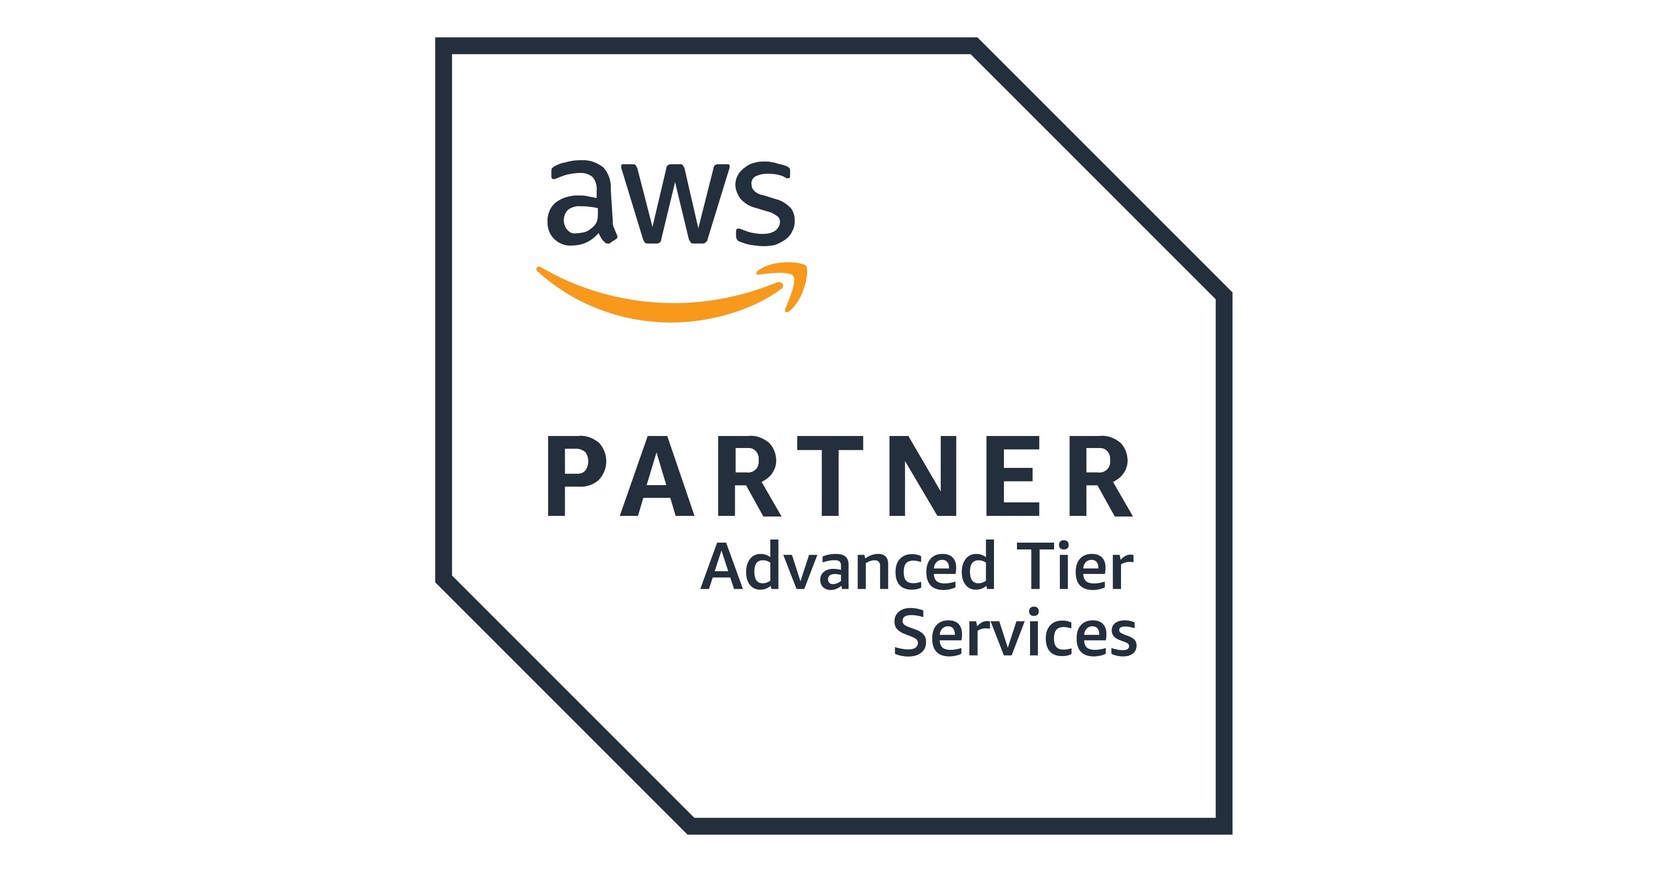 aws partner advanced tier services